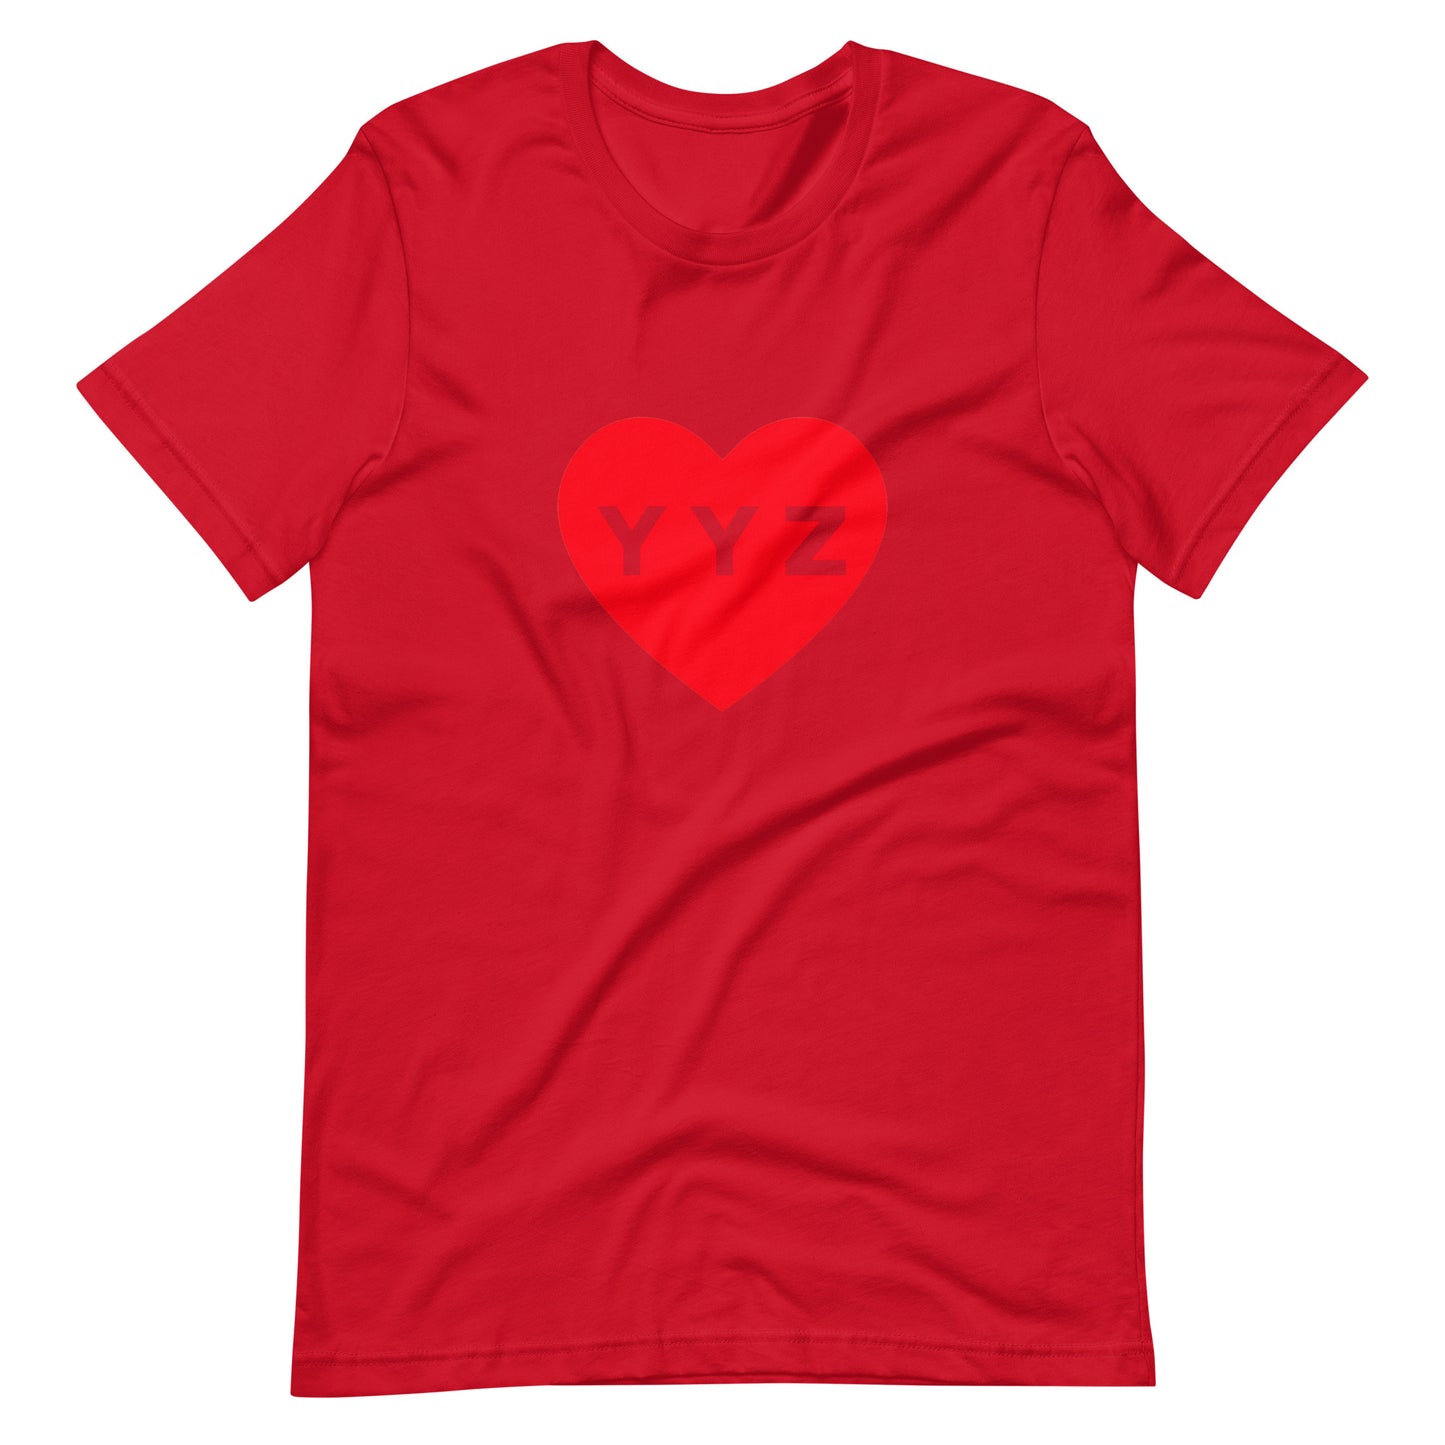 YYZ Heart Unisex T-shirt